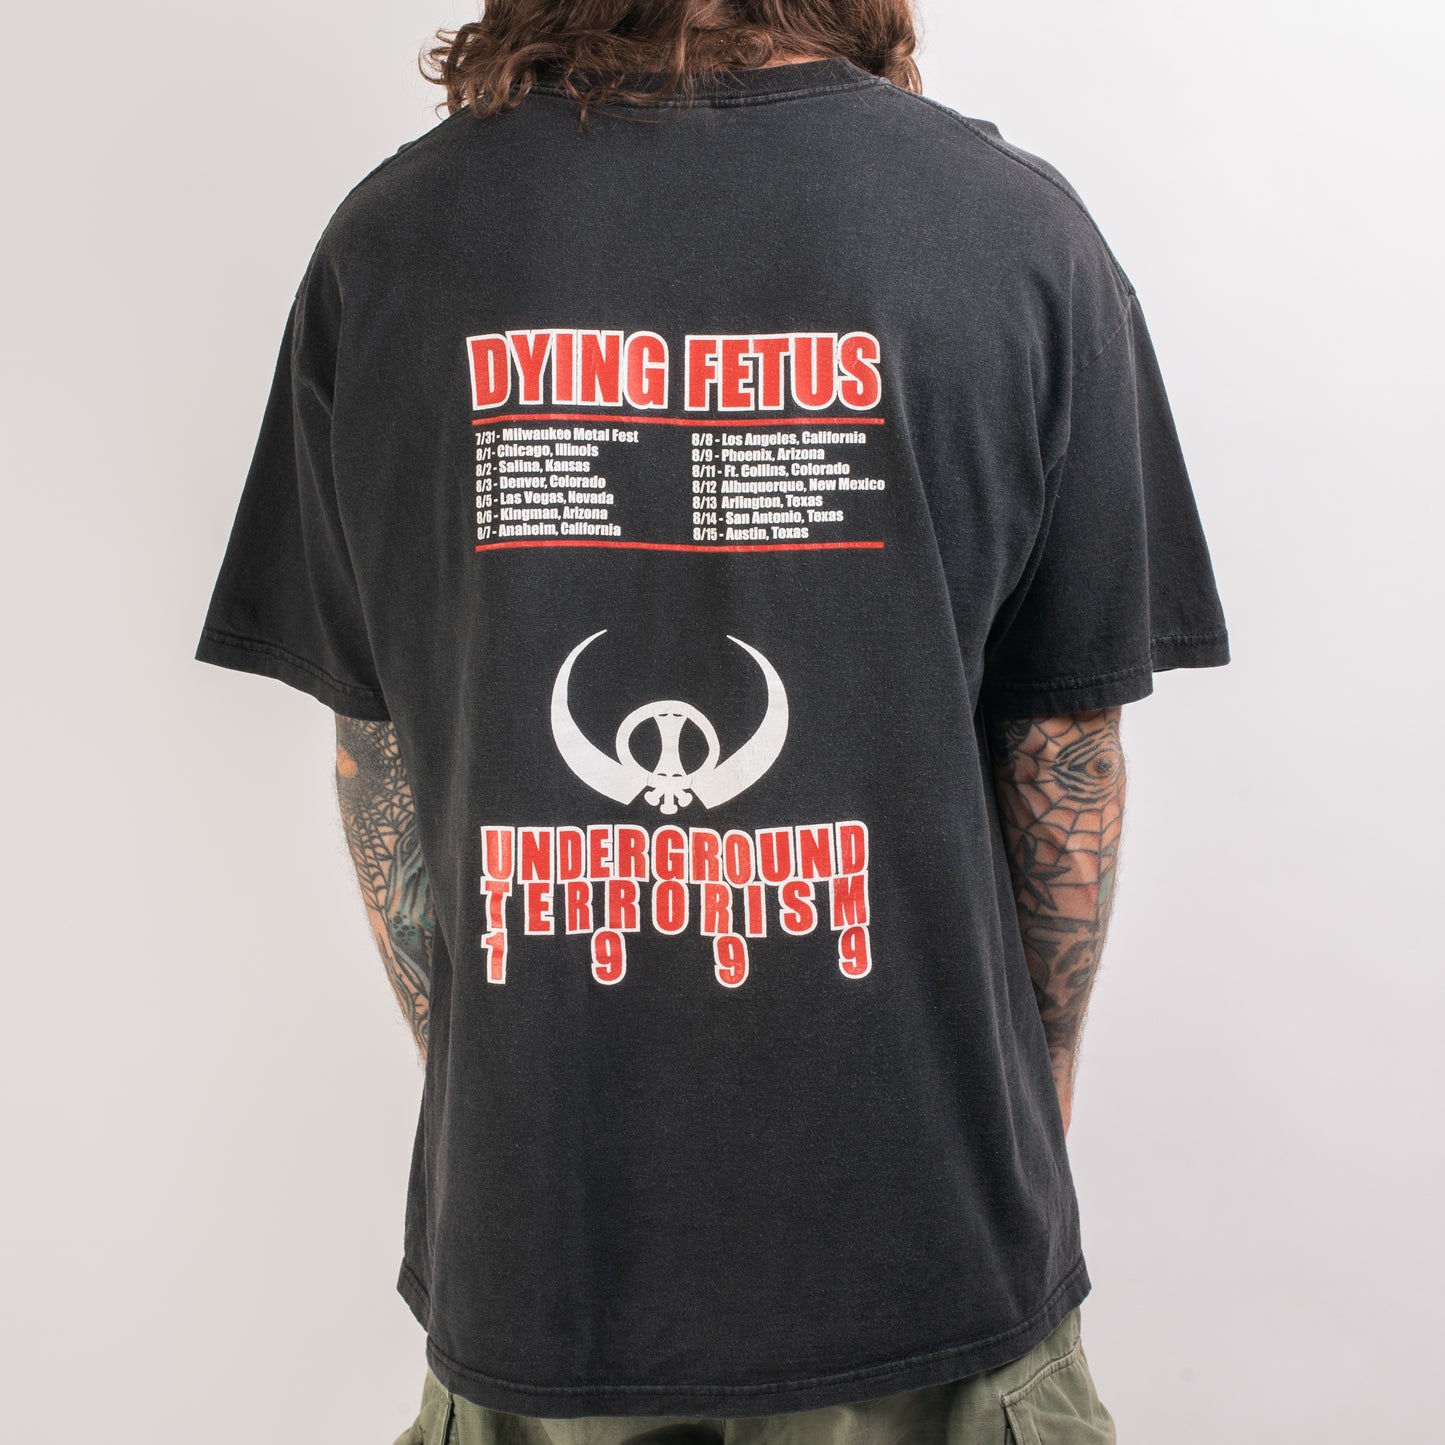 Vintage 1999 Dying Fetus Underground Terrorism Tour T-Shirt